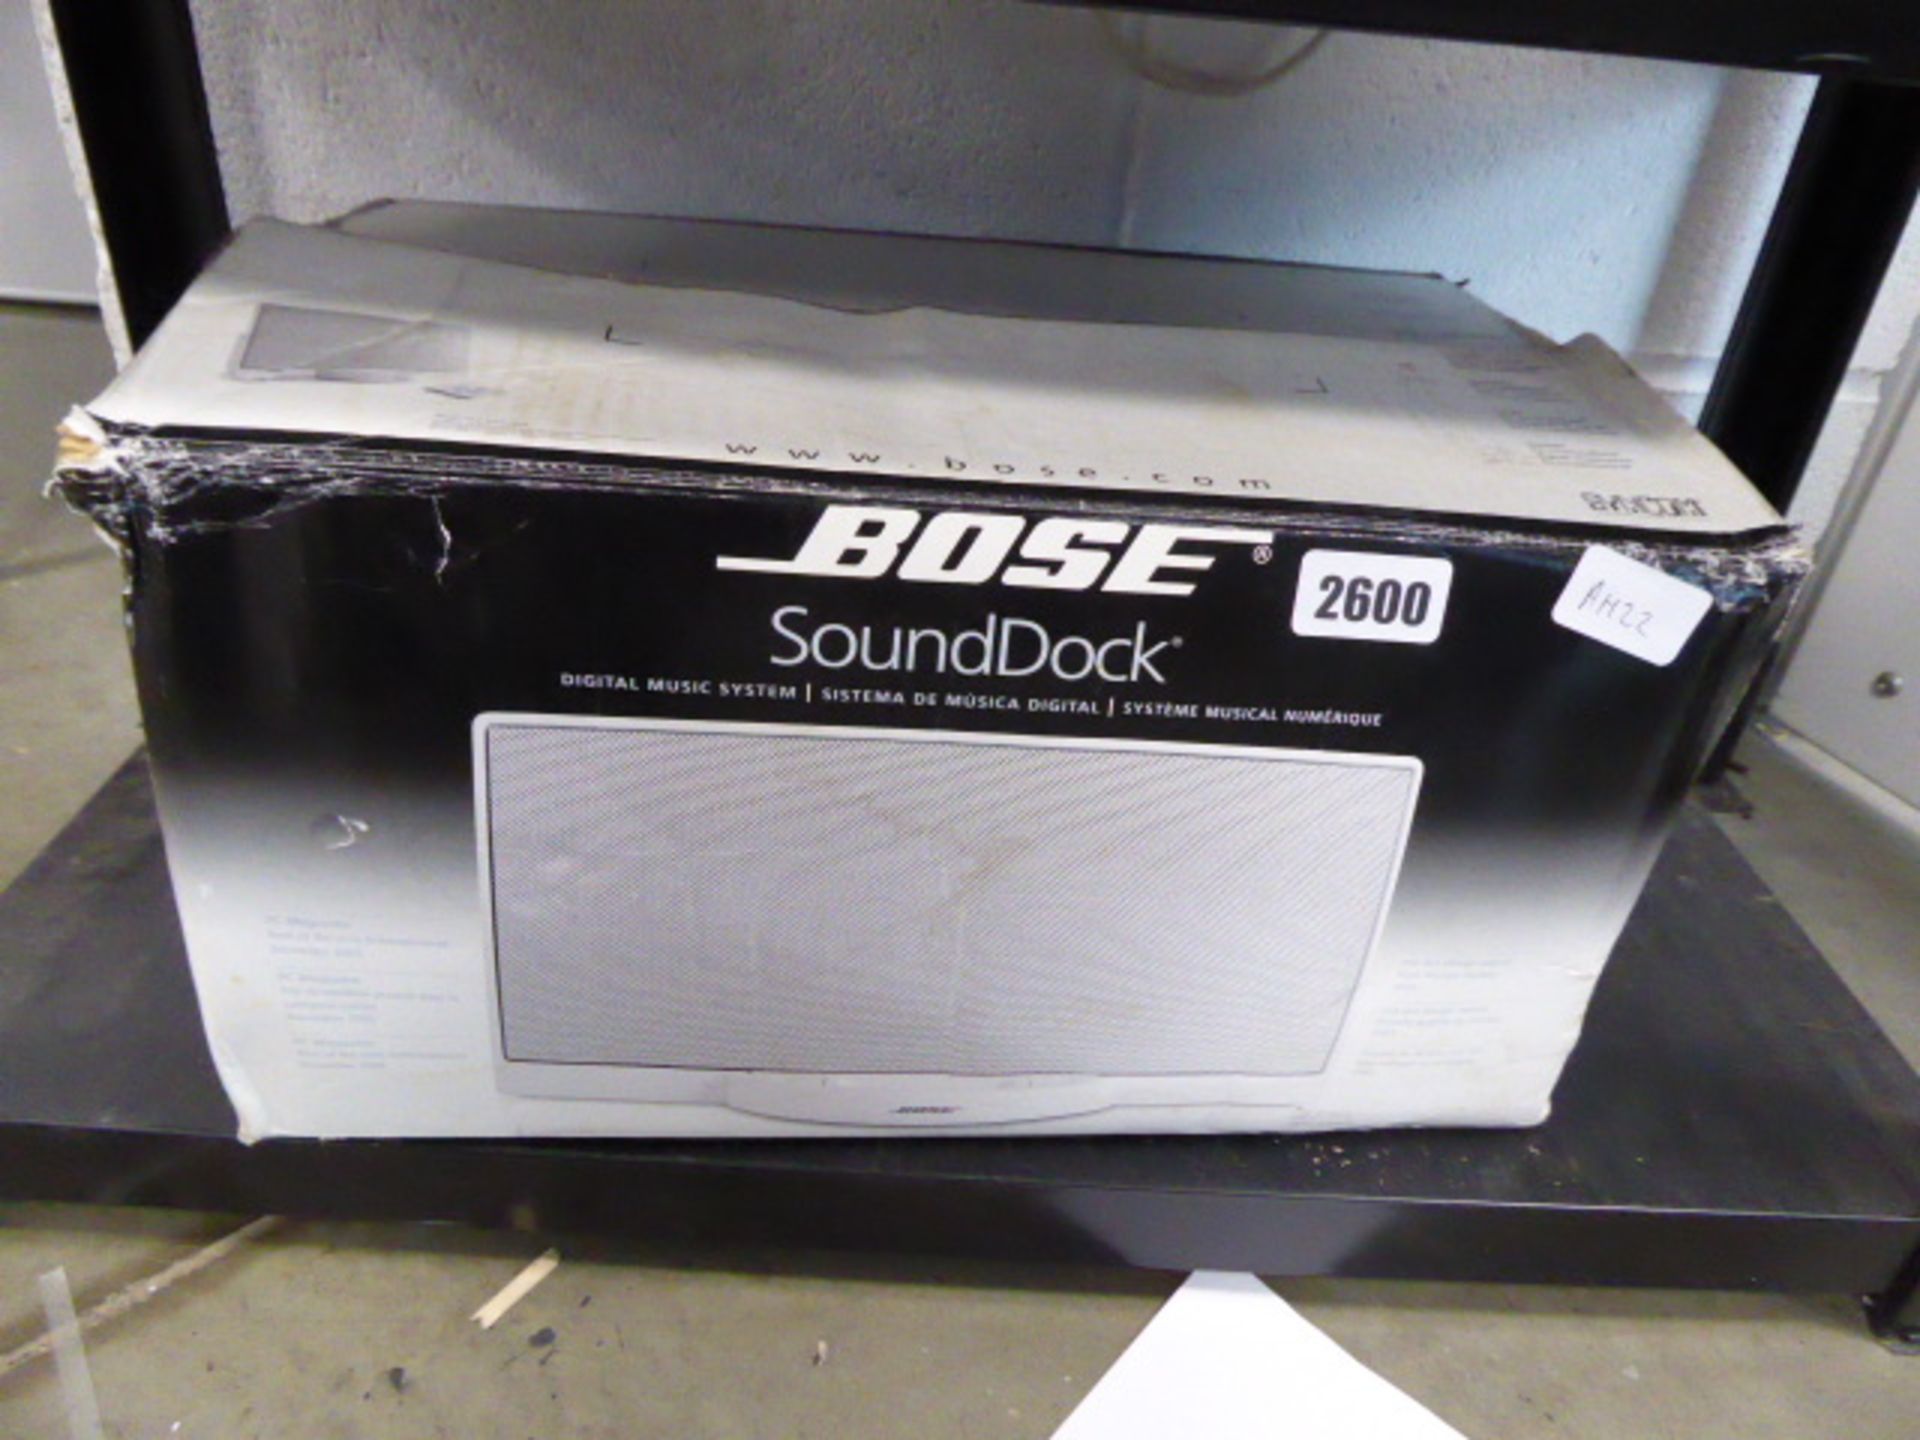 Bose Sounddock digital music system in box